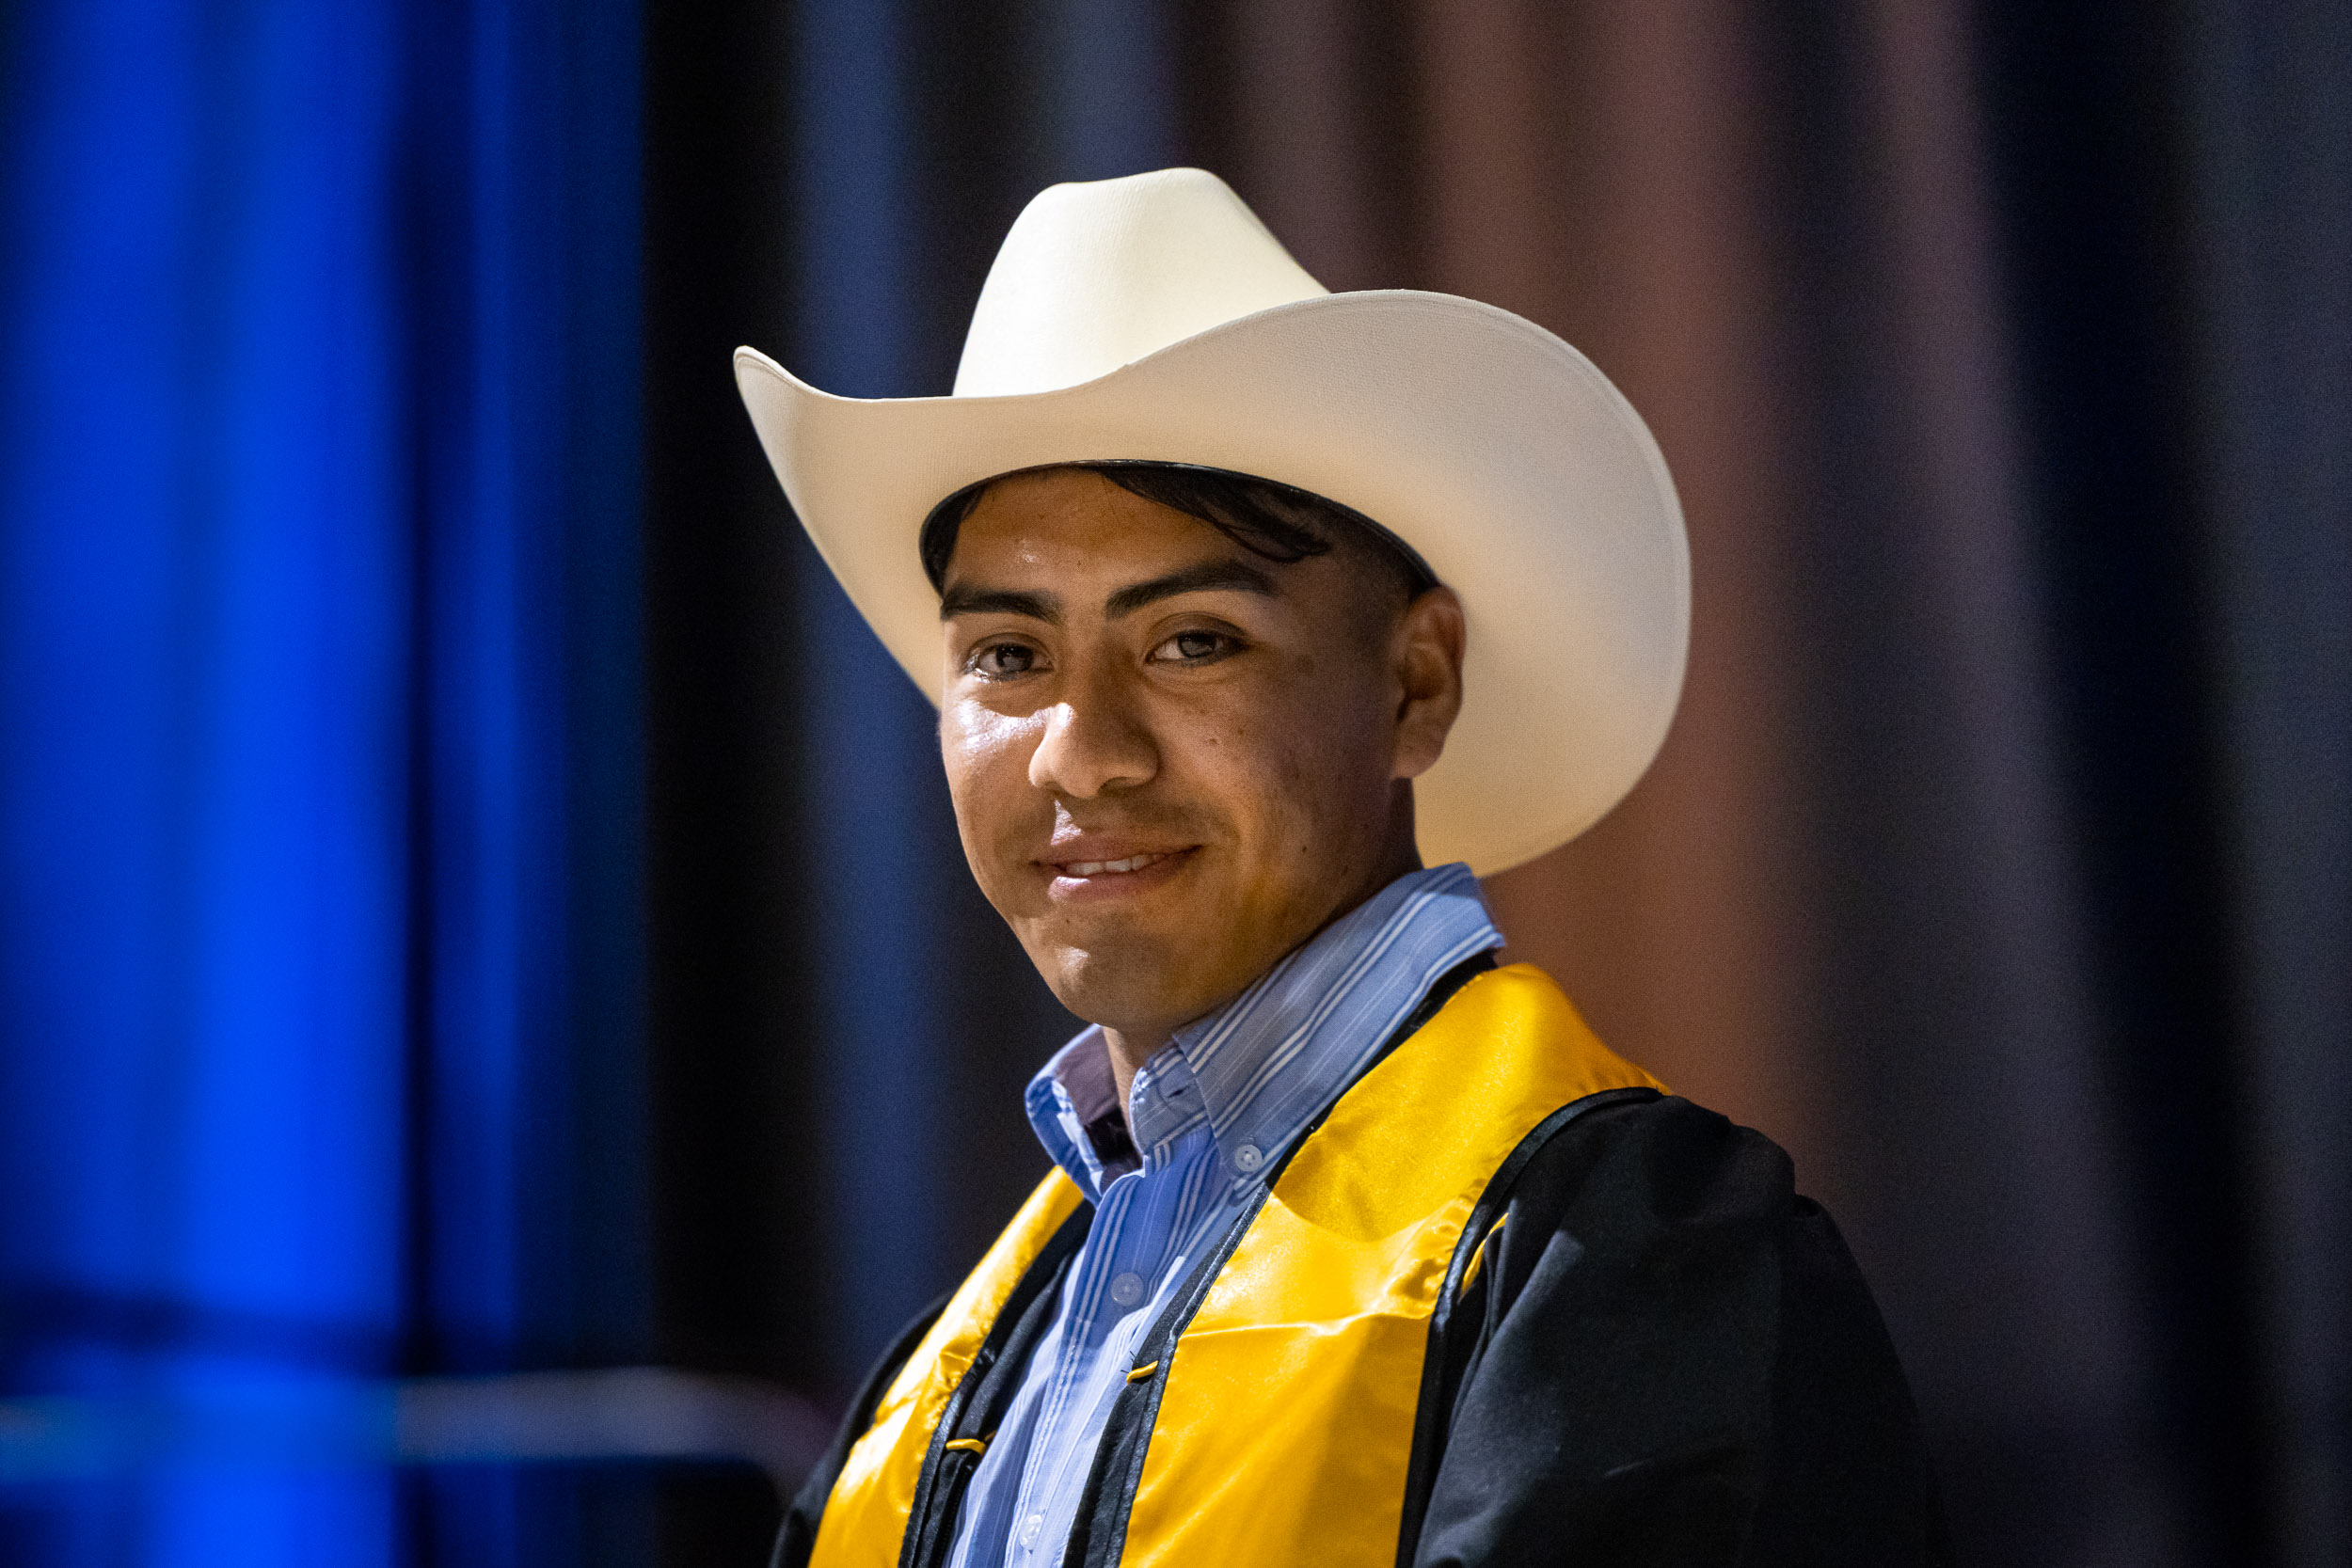 chicano cowboy graduate